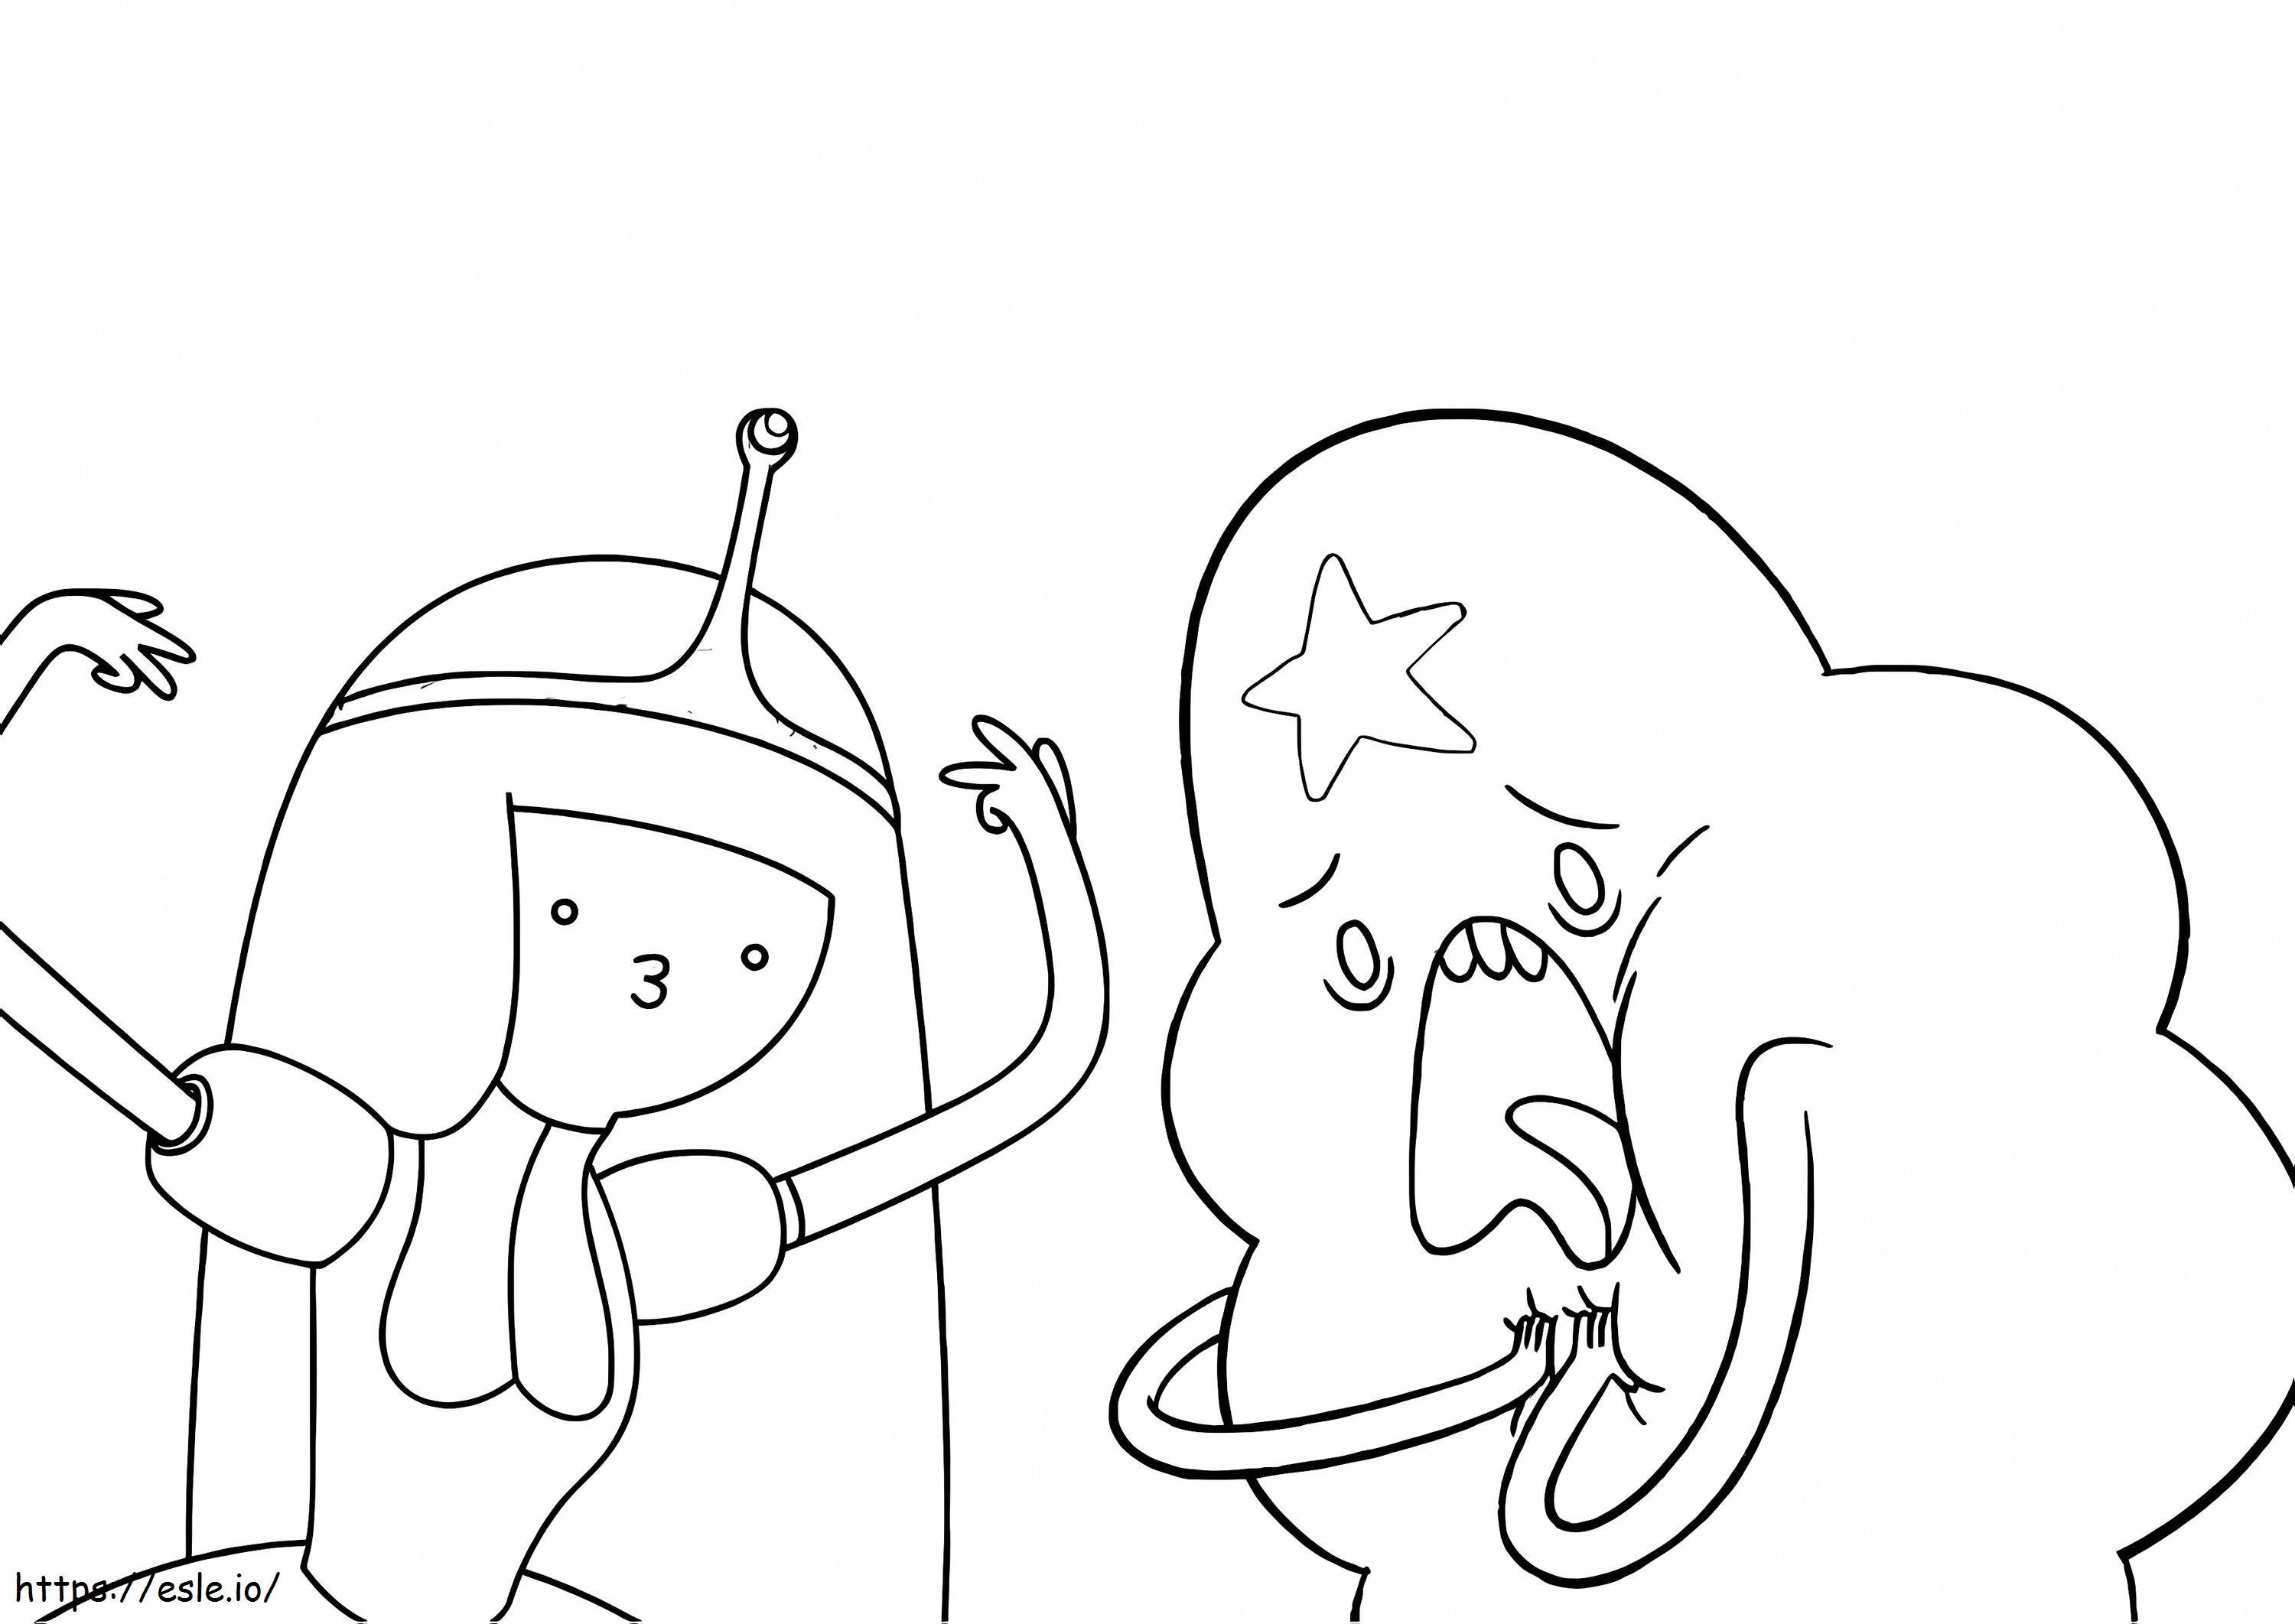 Princess Bubblegum And Lumpy Space Princess coloring page